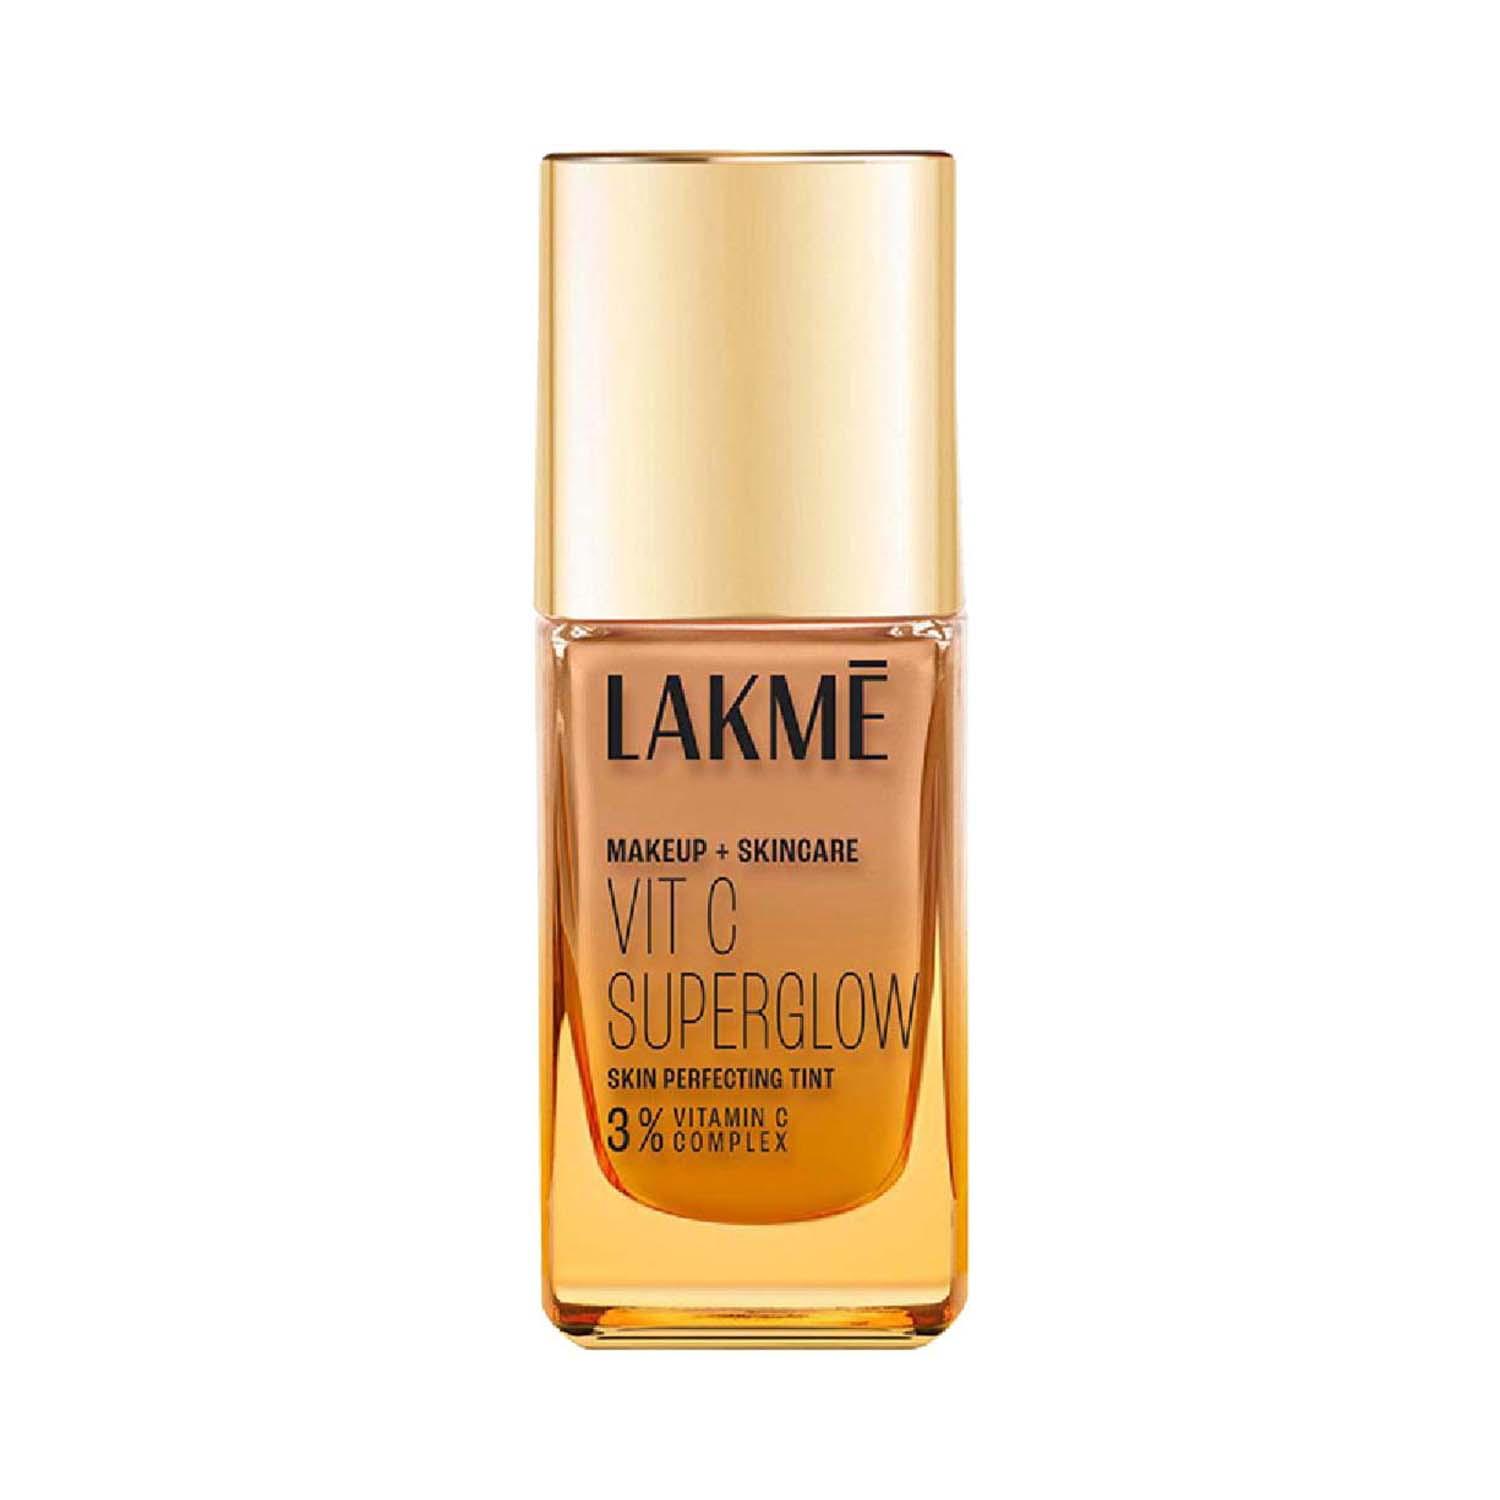 Lakme | Lakme Makeup+Skincare Vit C Superglow Skin Perfecting Tint - Warm Beige W240 (25 ml)